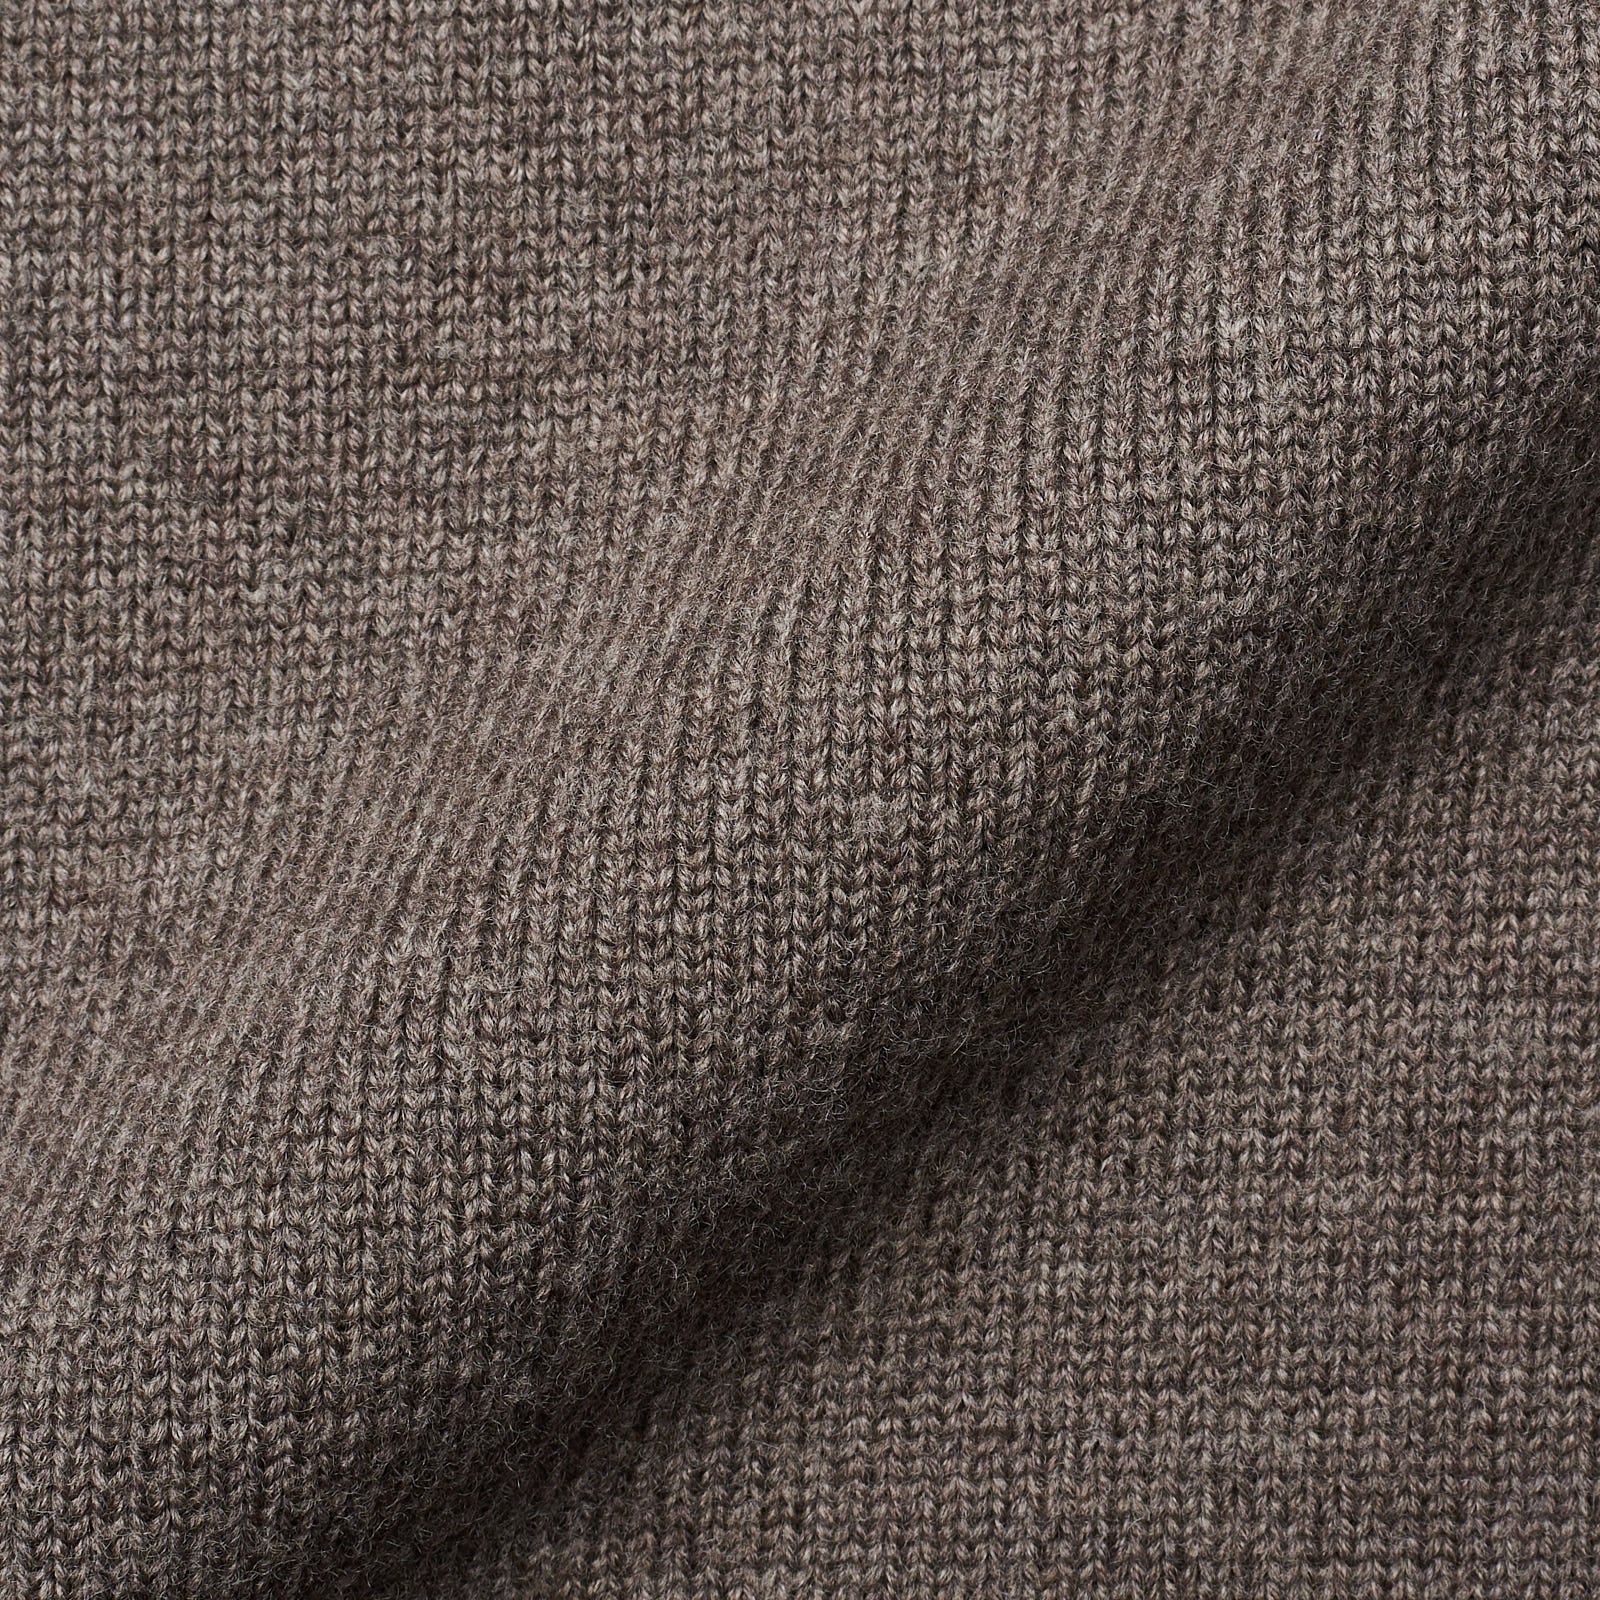 FEAR OF GOD Dusty Concrete Heather Virgin Wool Knit Crewneck Sweater NEW Size L